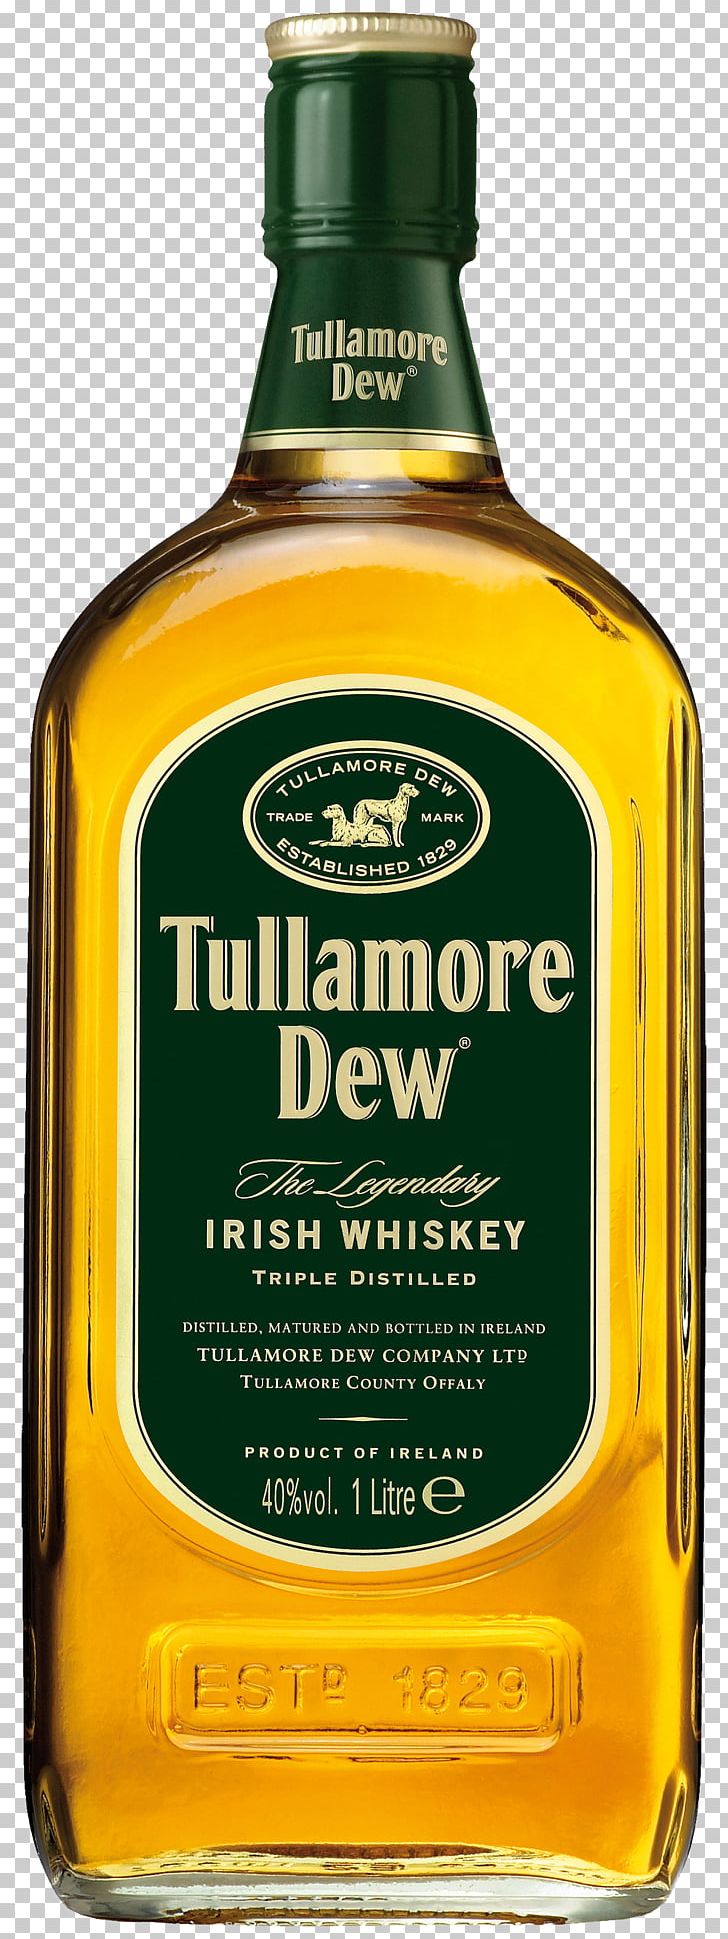 Tullamore Dew Irish Whiskey Single Malt Whisky Blended Whiskey PNG, Clipart, Alcohol, Blended Whiskey, Bottle, Bushmills, Canadian Whisky Free PNG Download